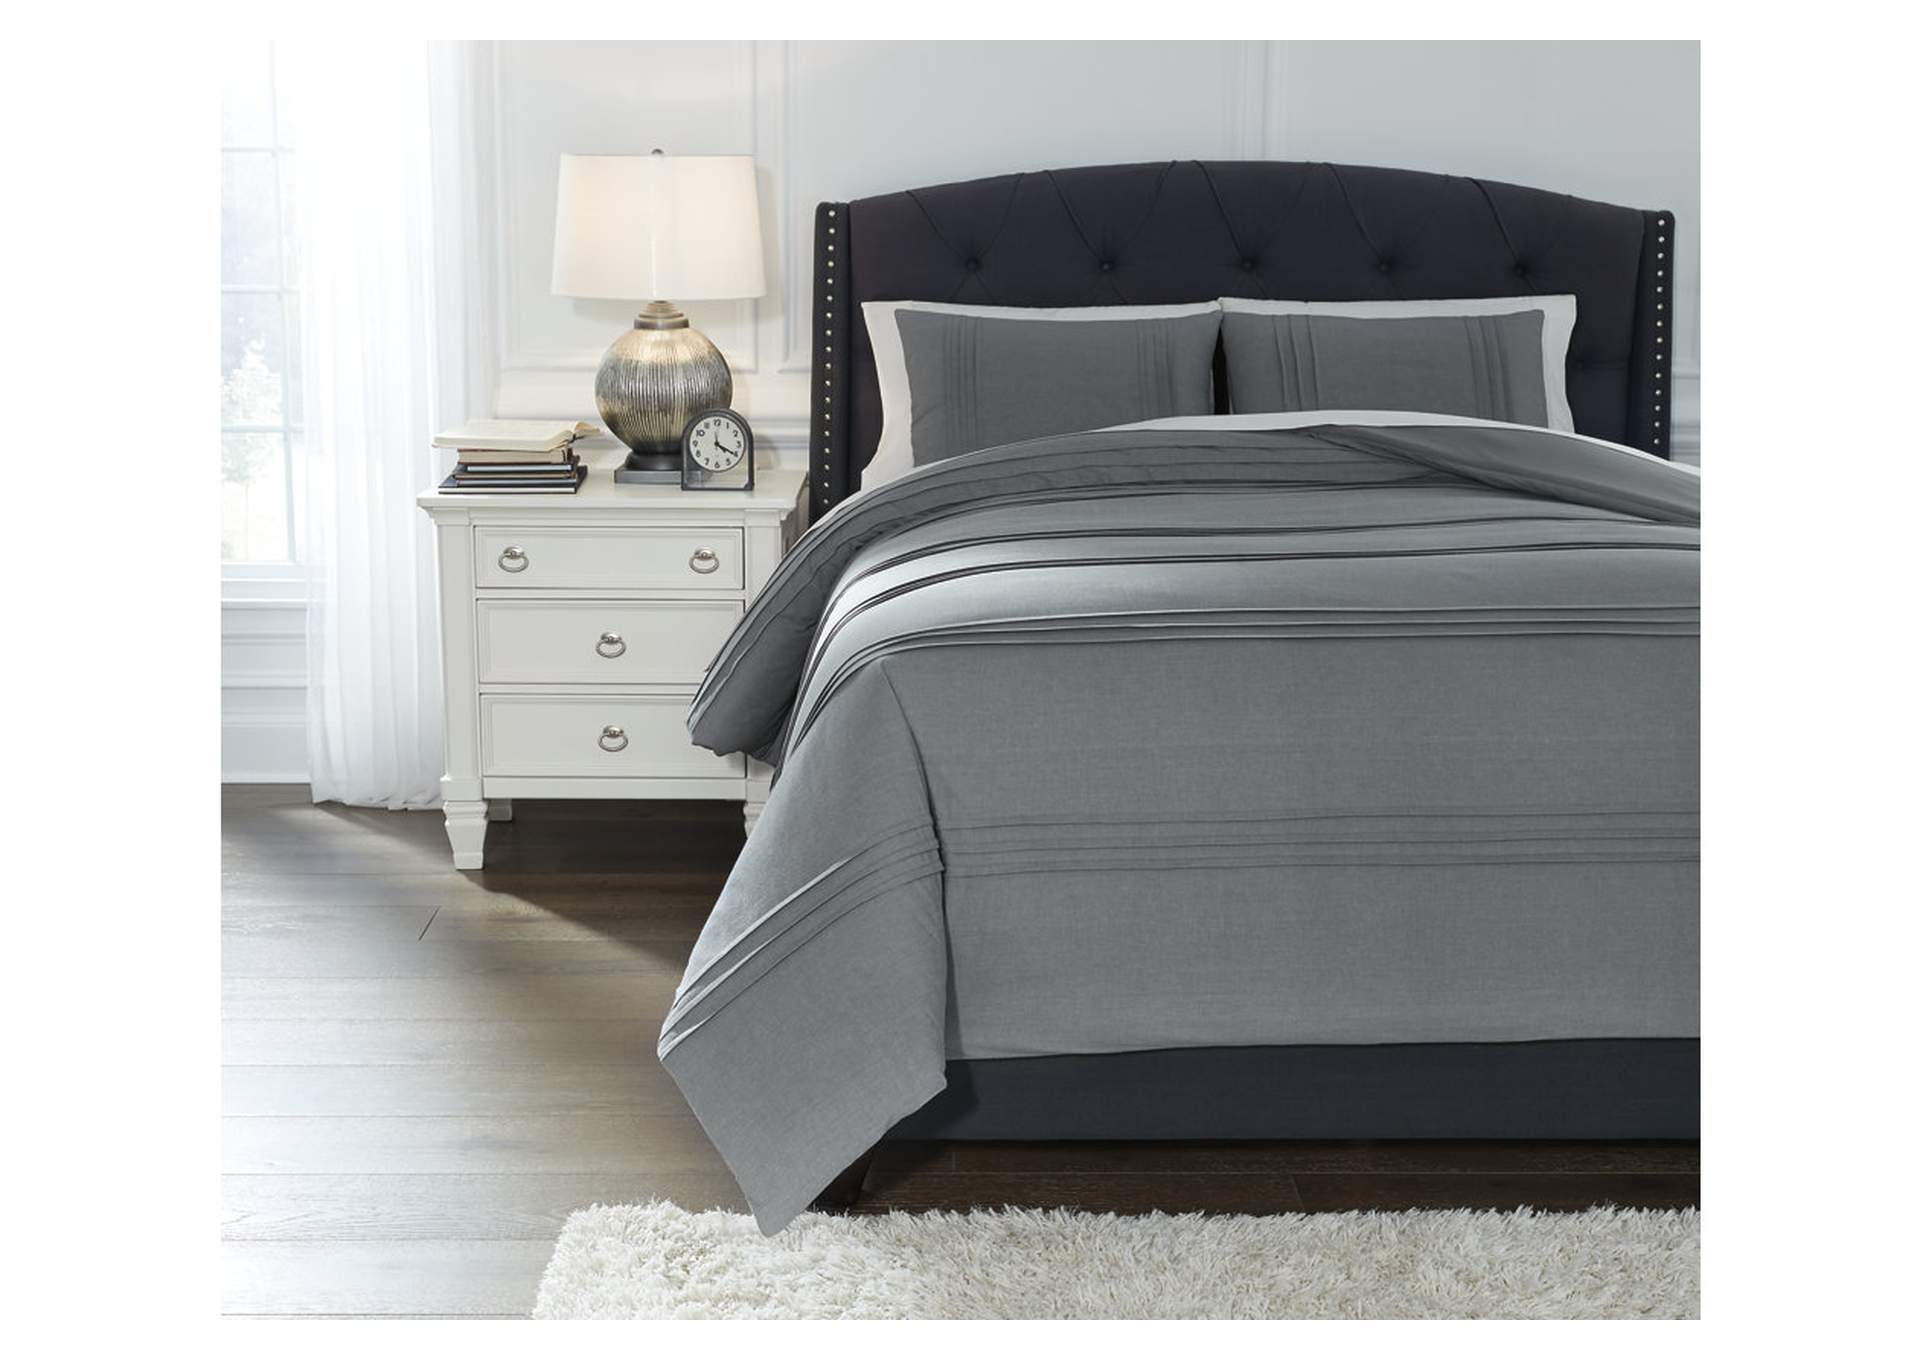 Mattias 3-Piece Queen Comforter Set,Direct To Consumer Express